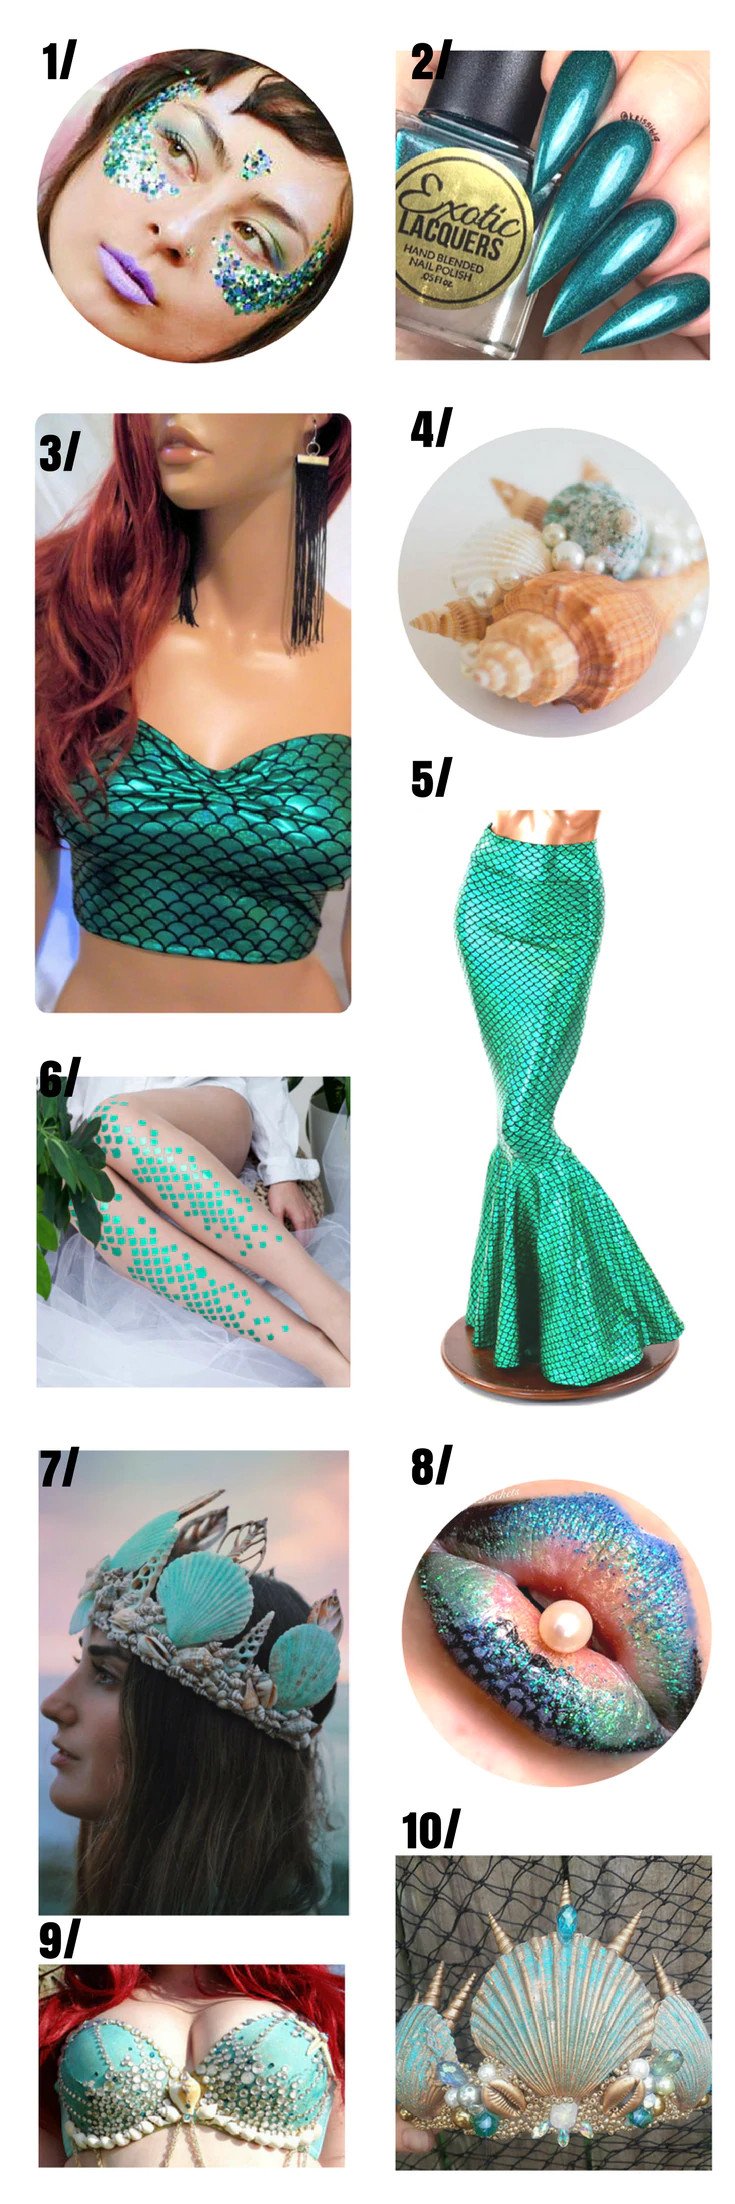 Mermaid costume for women.